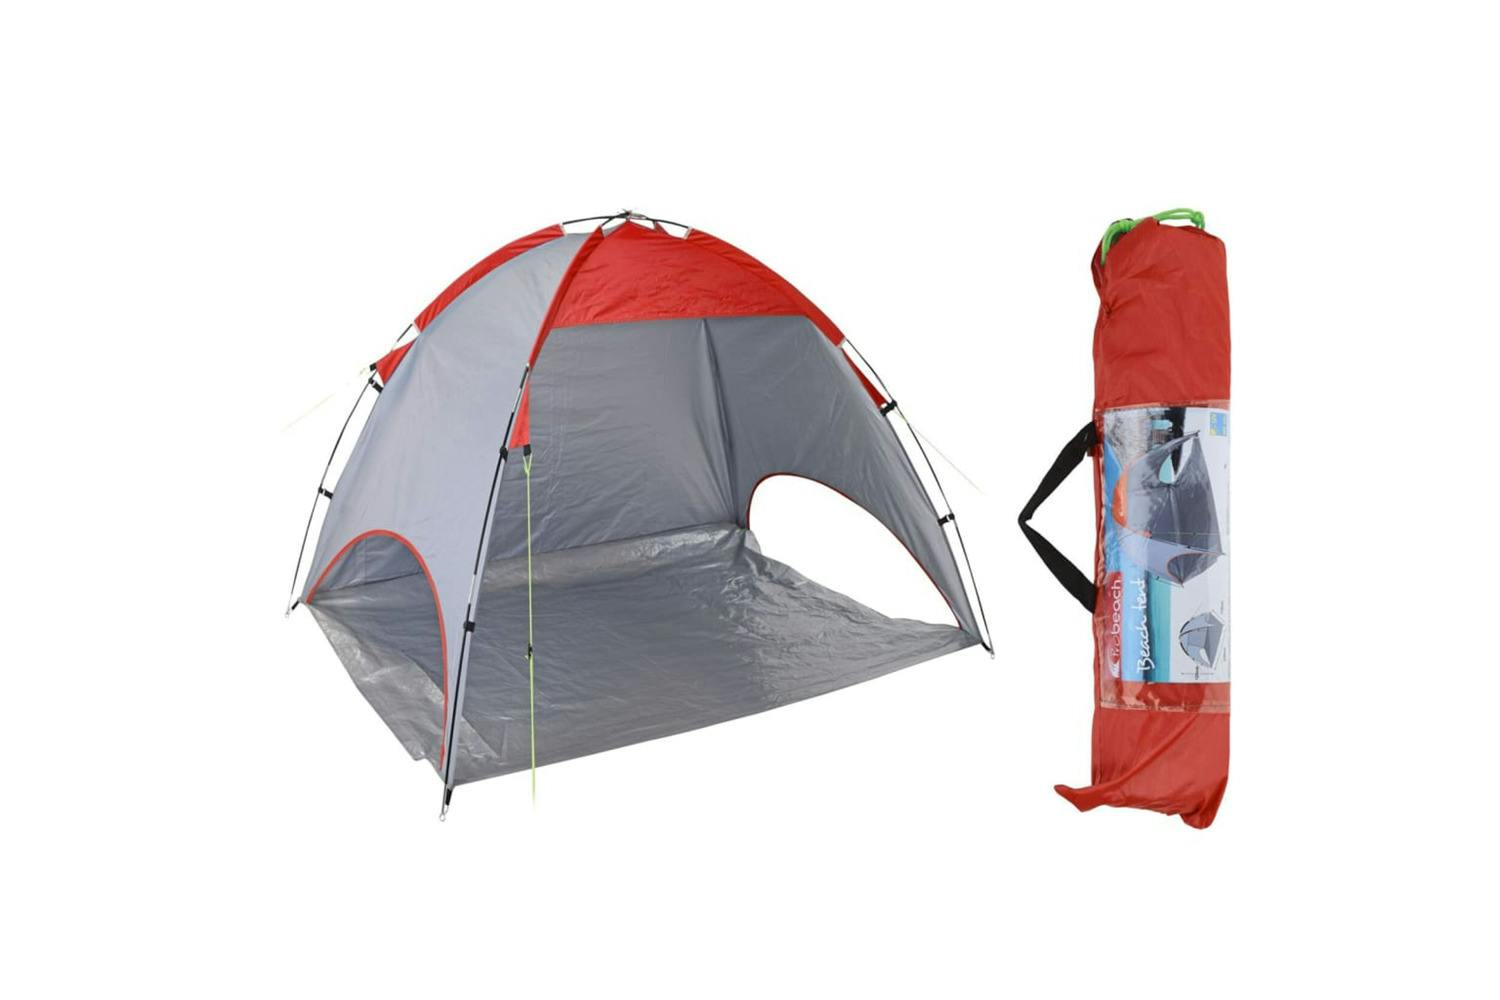 Probeach 441918 Beach Tent Red And Grey 220x120x115 Cm